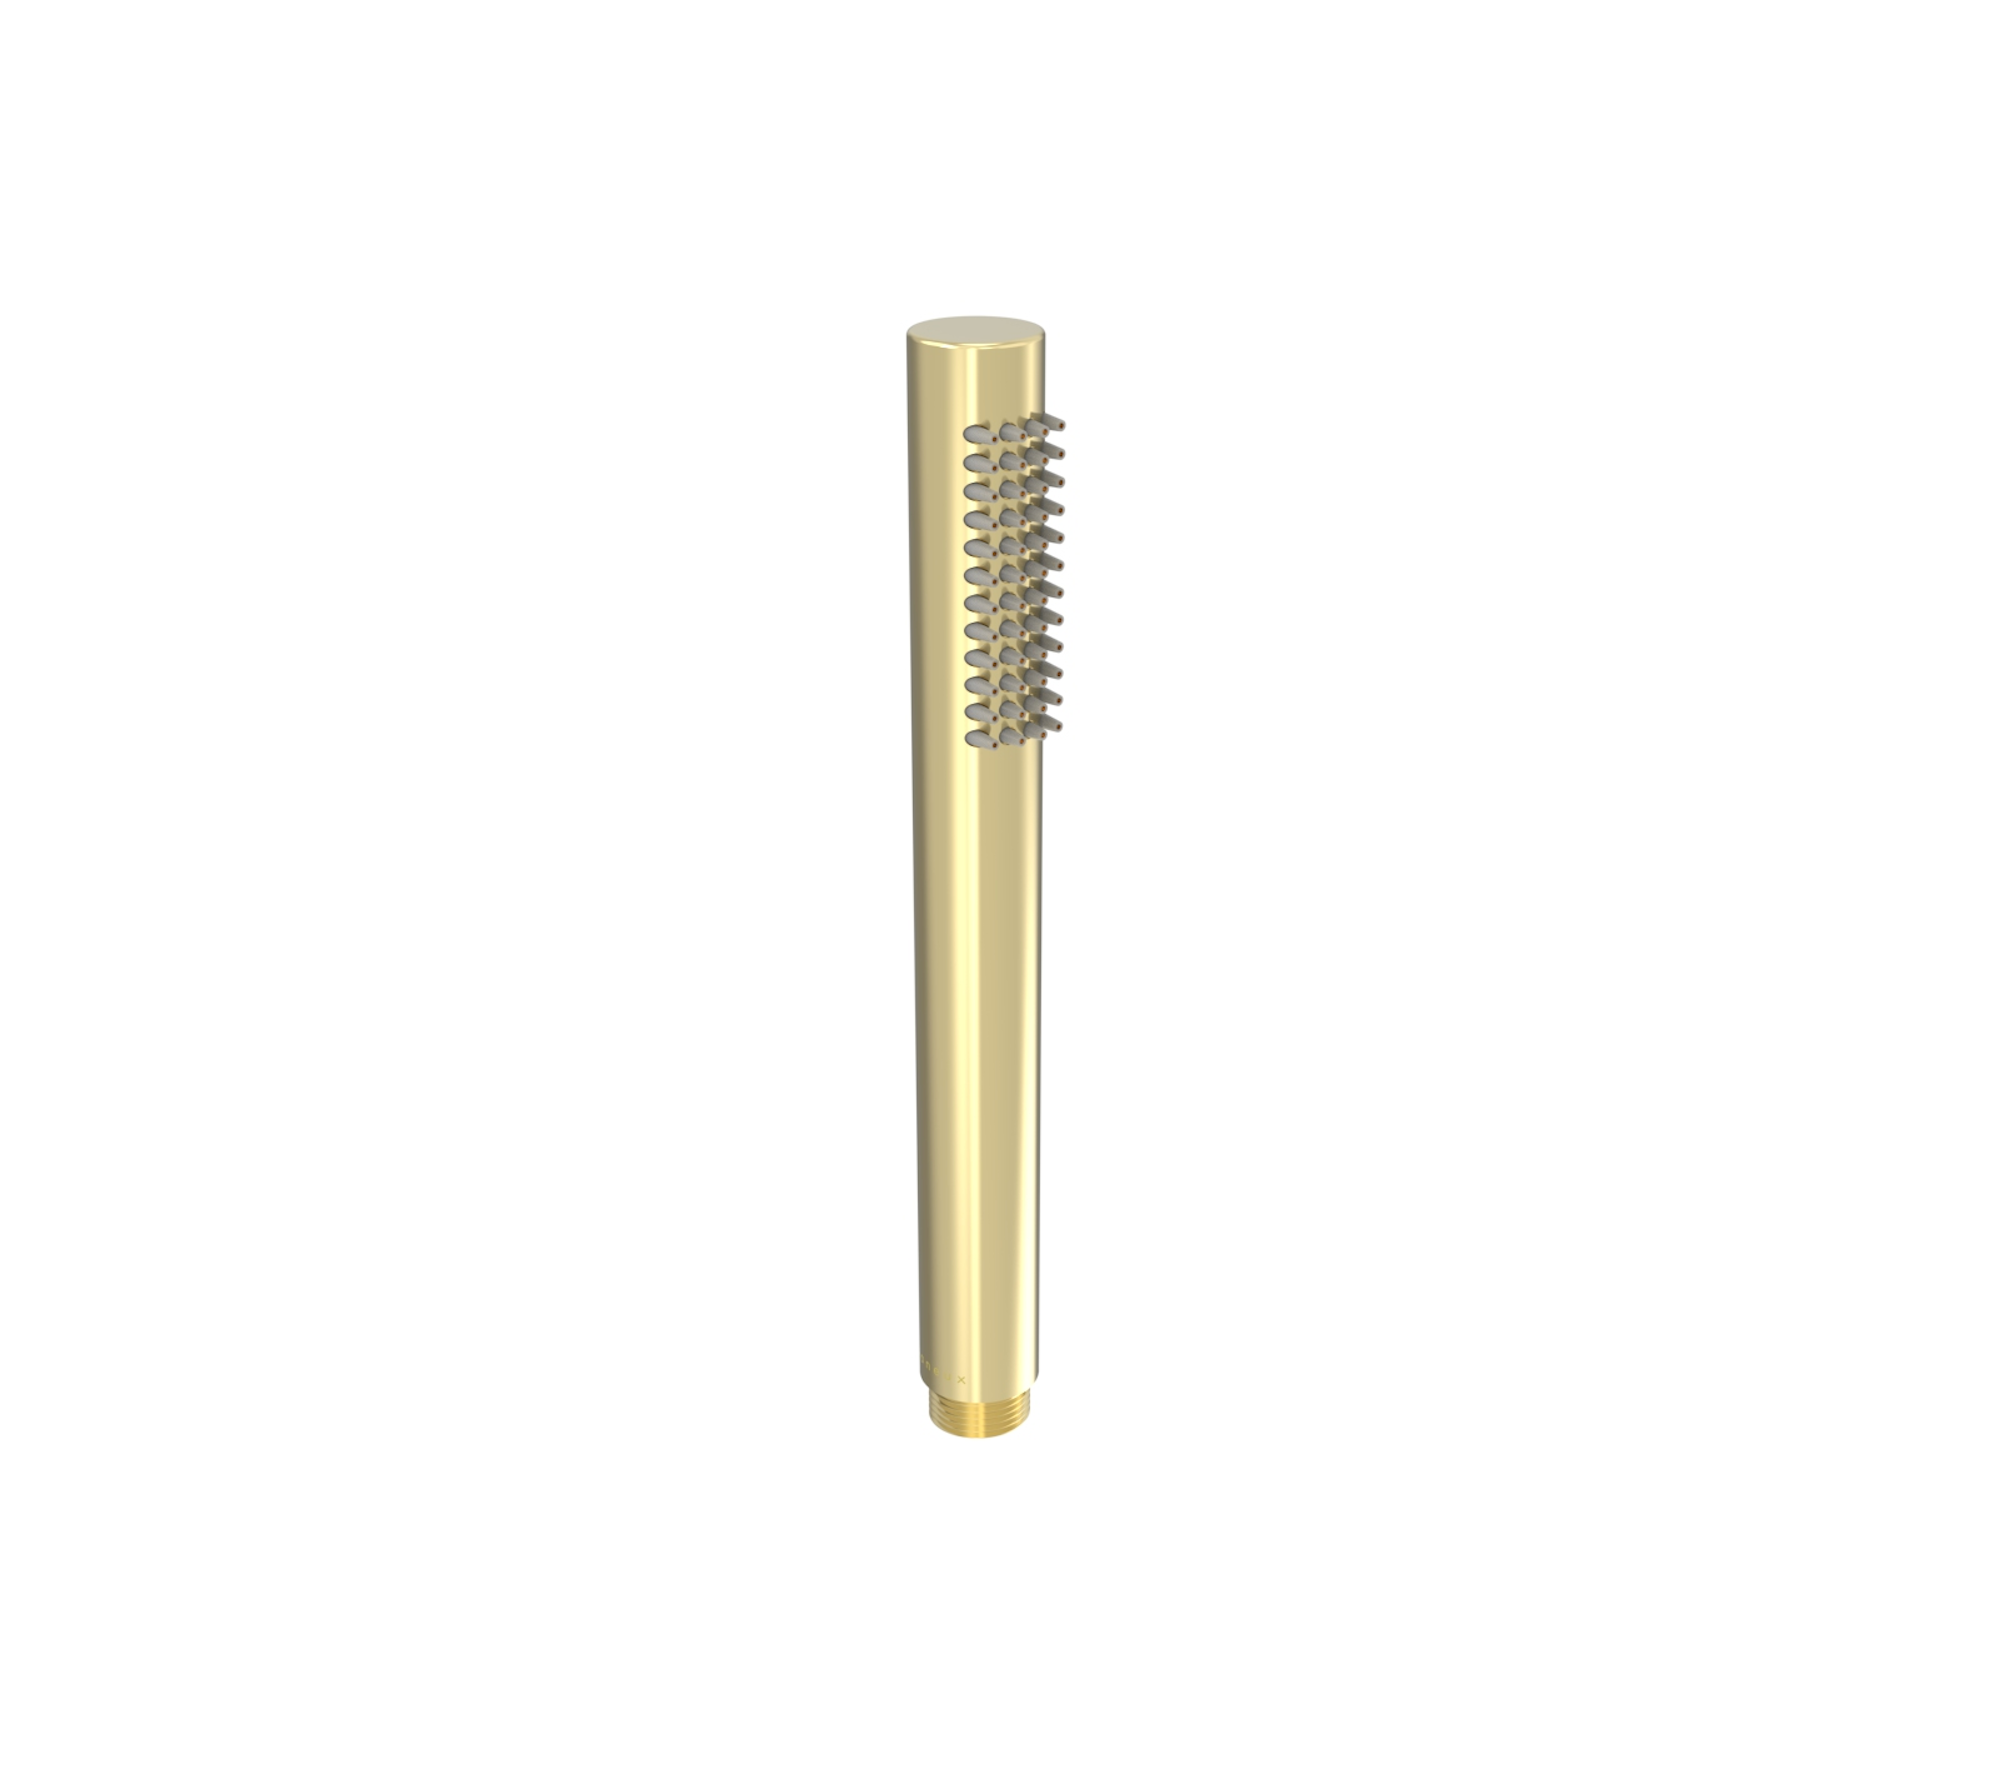 COS slim round shower handset - Brushed Brass